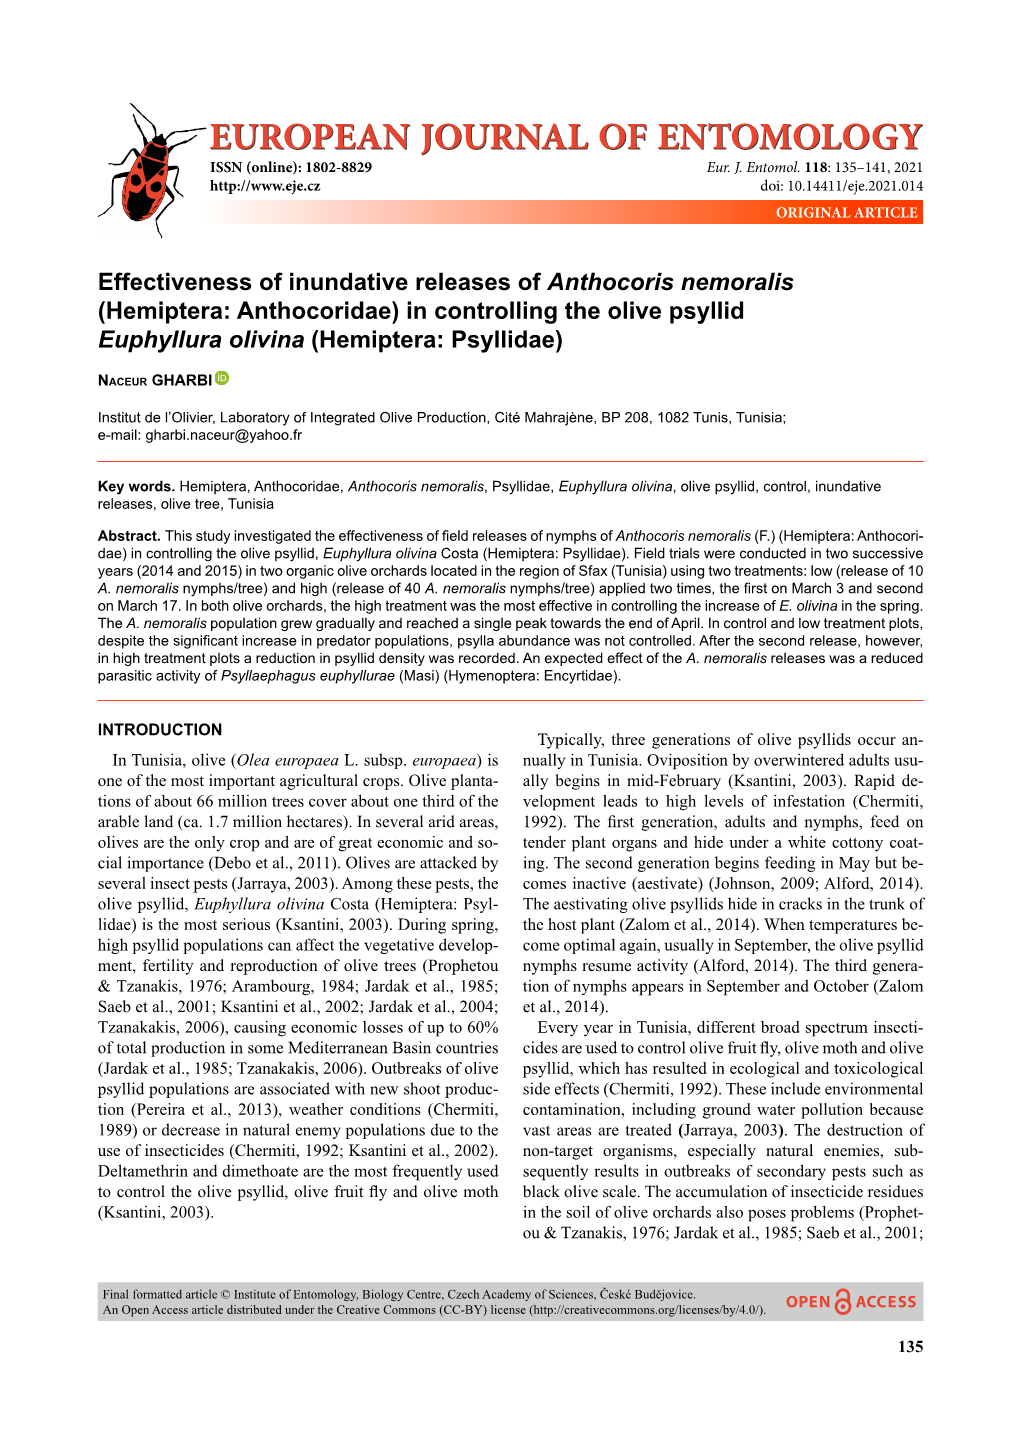 Effectiveness of Inundative Releases of Anthocoris Nemoralis (Hemiptera: Anthocoridae) in Controlling the Olive Psyllid Euphyllura Olivina (Hemiptera: Psyllidae)